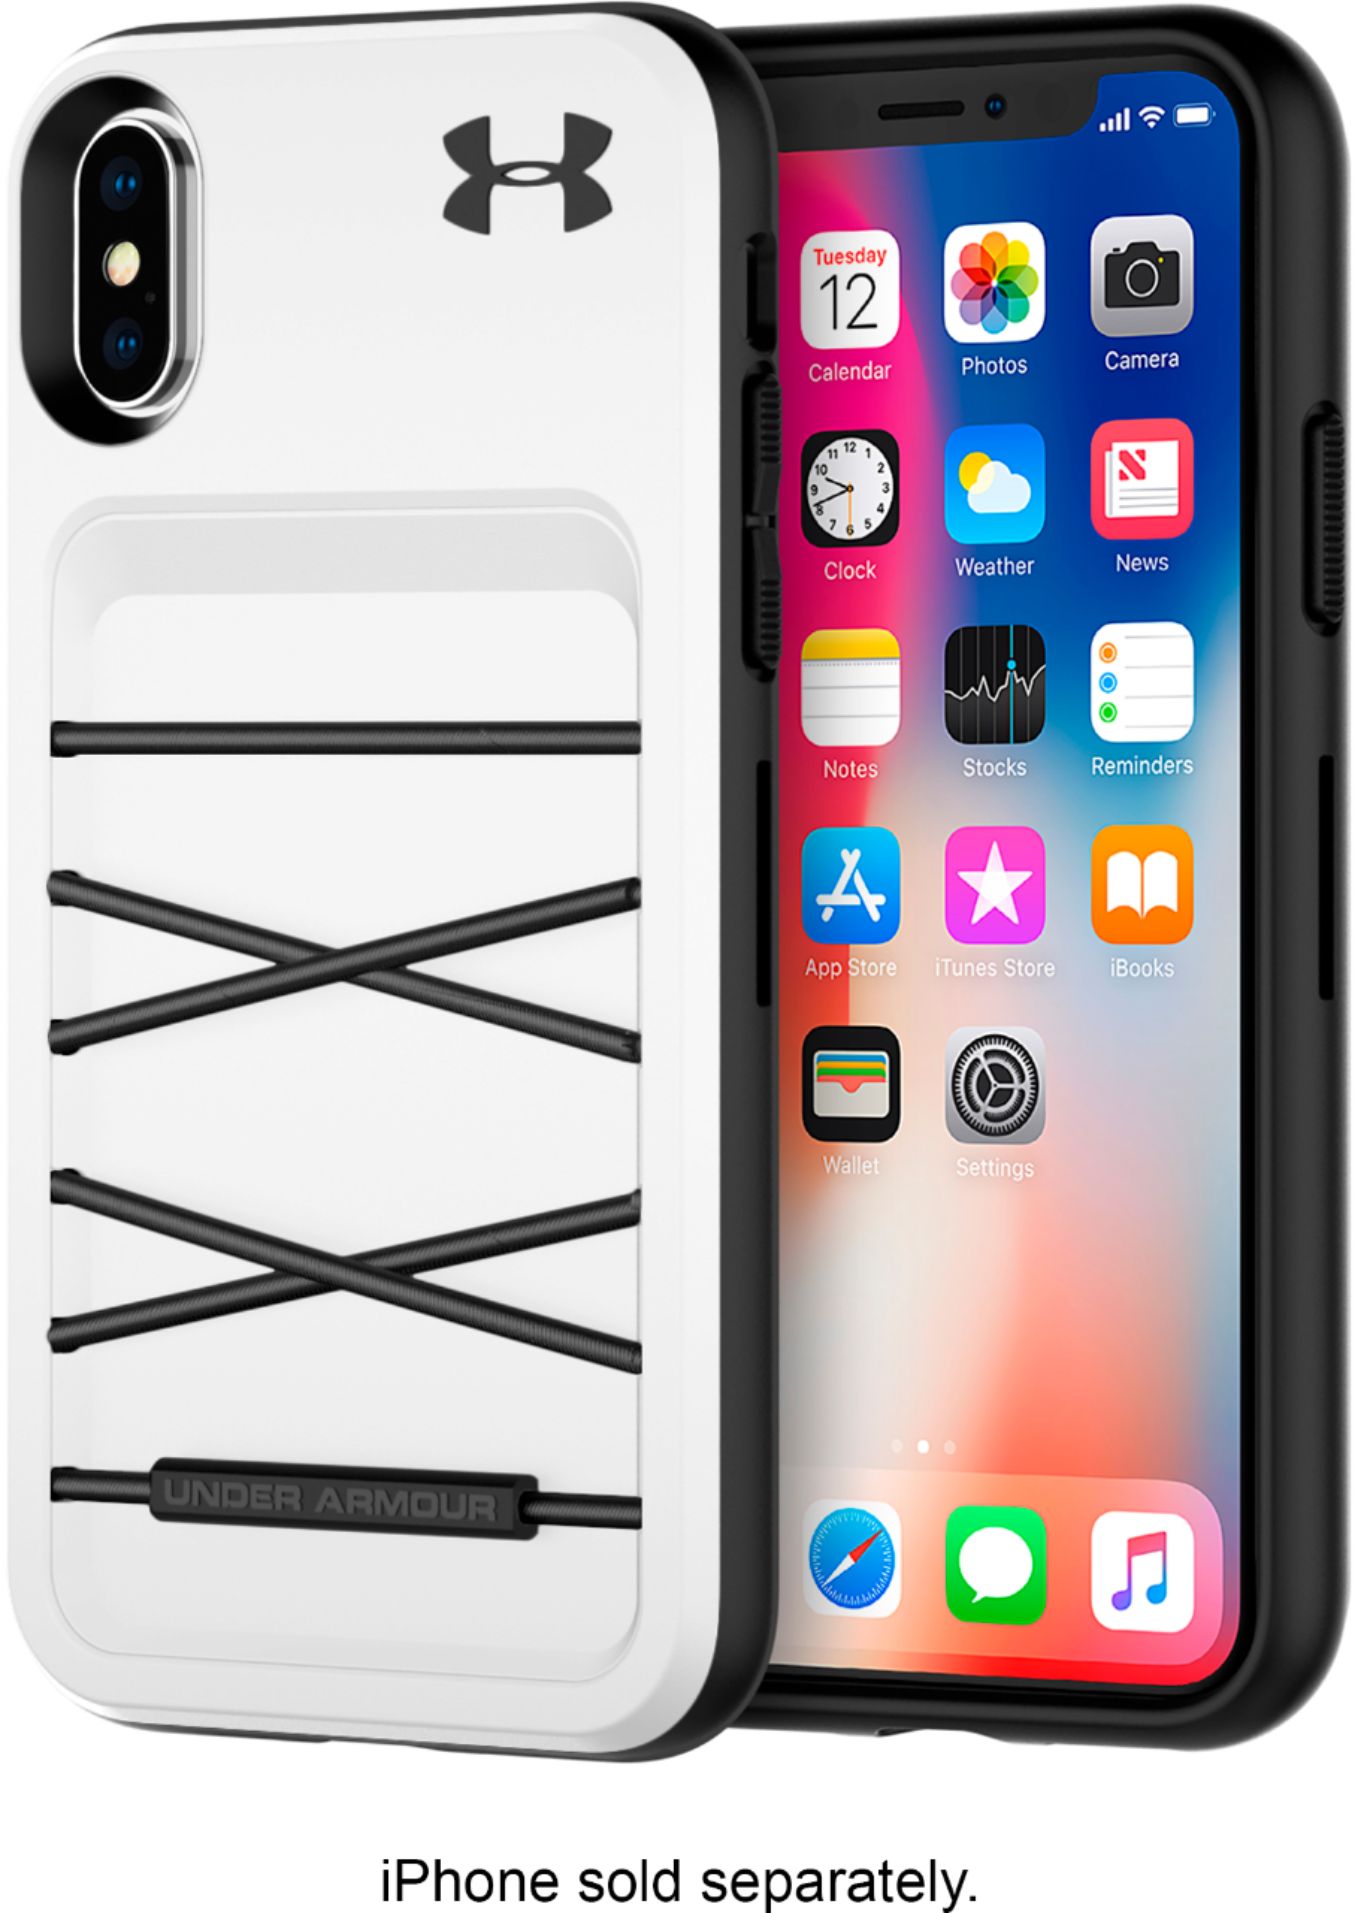 iphone bungee cord